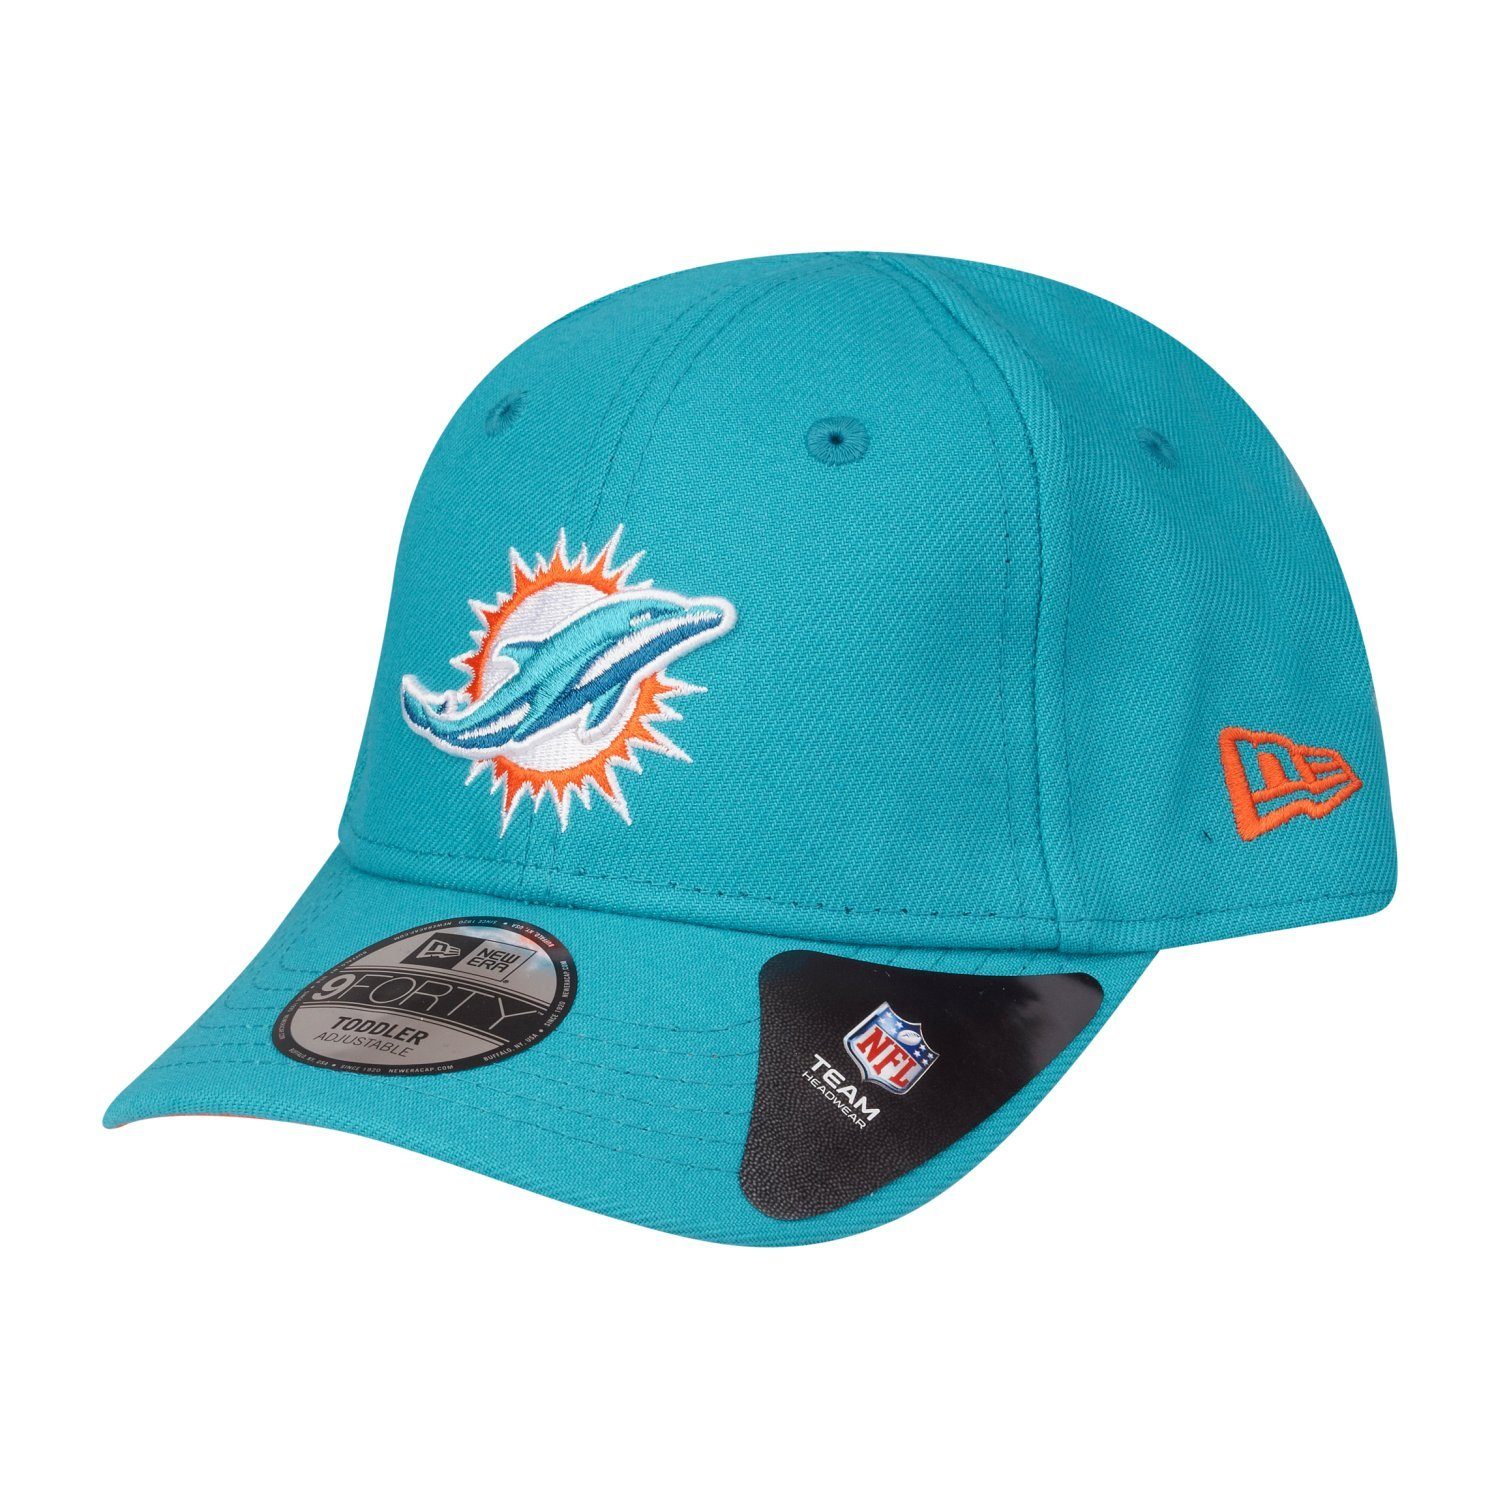 THE LEAGUE Teams NFL 9Forty Dolphins Miami Baseball New Cap Era